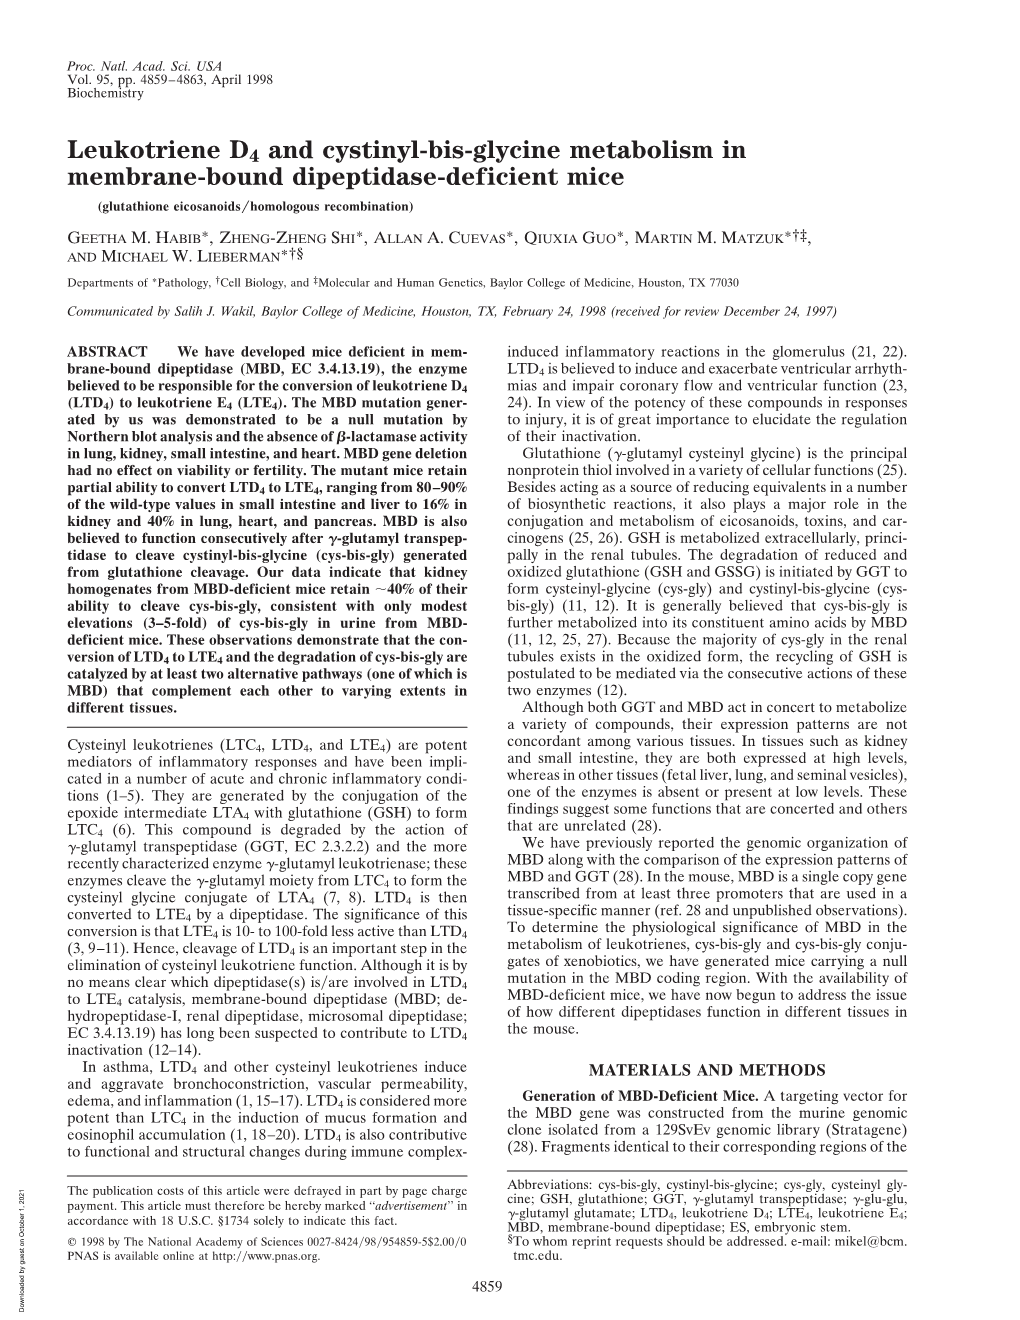 Leukotriene D4 and Cystinyl-Bis-Glycine Metabolism in Membrane-Bound Dipeptidase-Deficient Mice (Glutathione Eicosanoids͞homologous Recombination)